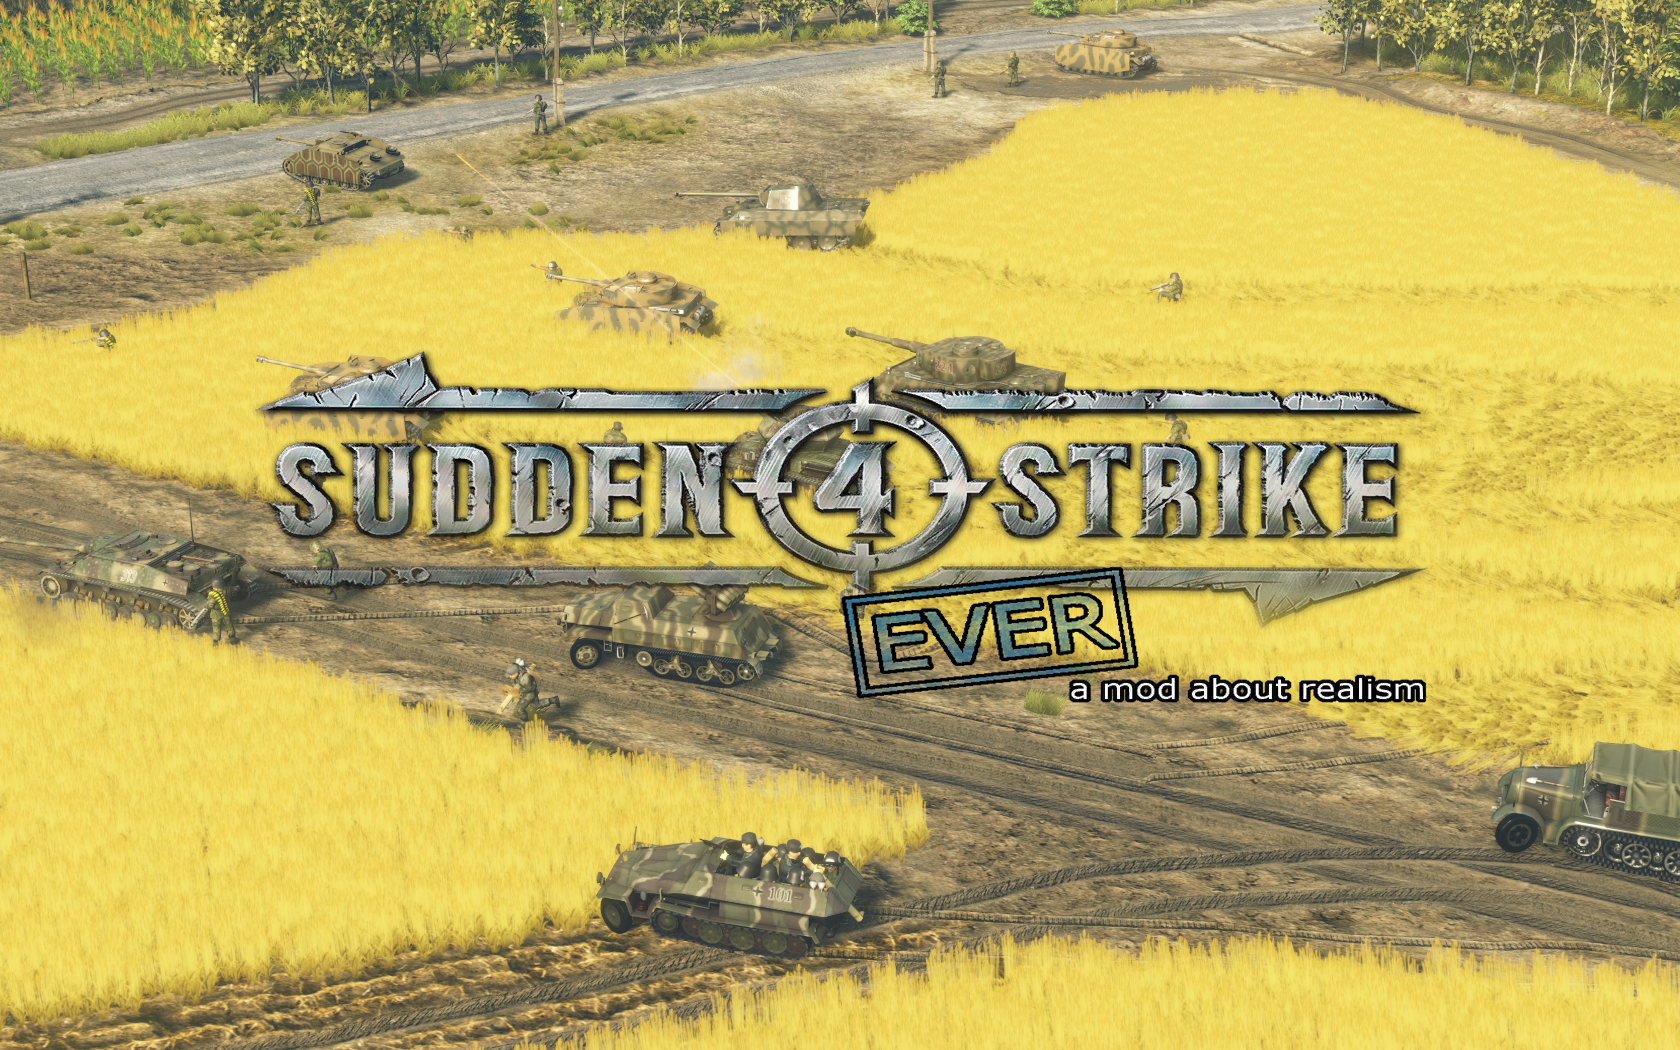 Sudden Strike Maps - Sudden Strike 4Ever Mod